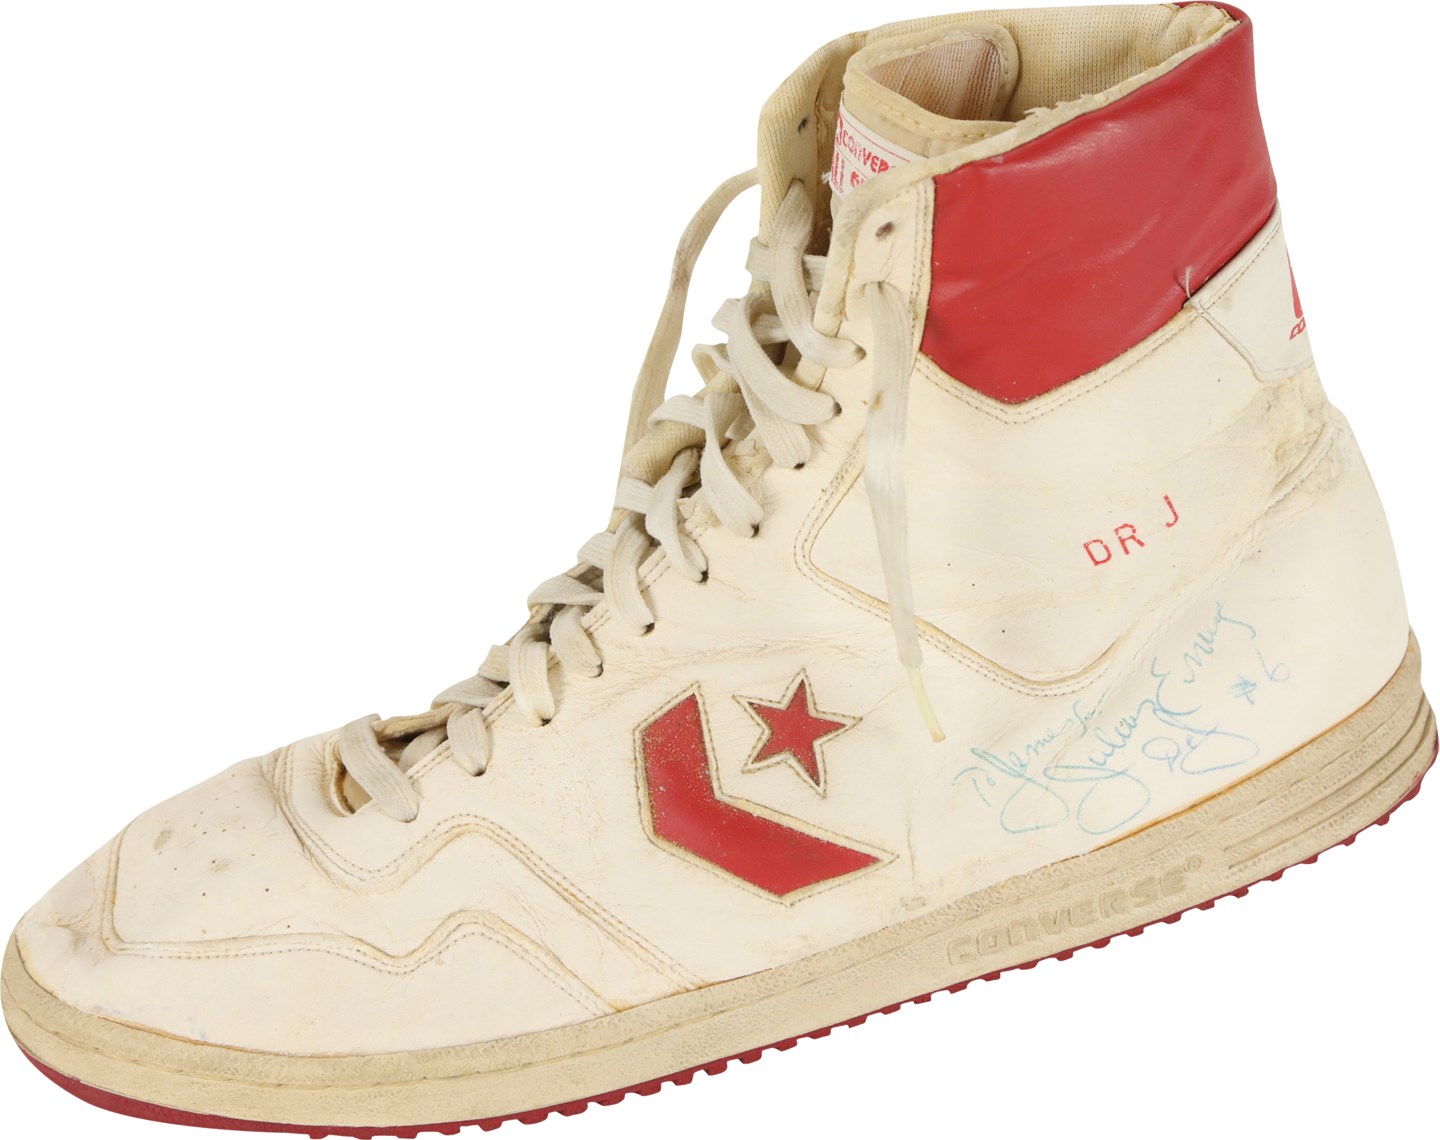 - Circa 1985 Julius Erving Signed Game Used Sneaker (PSA)